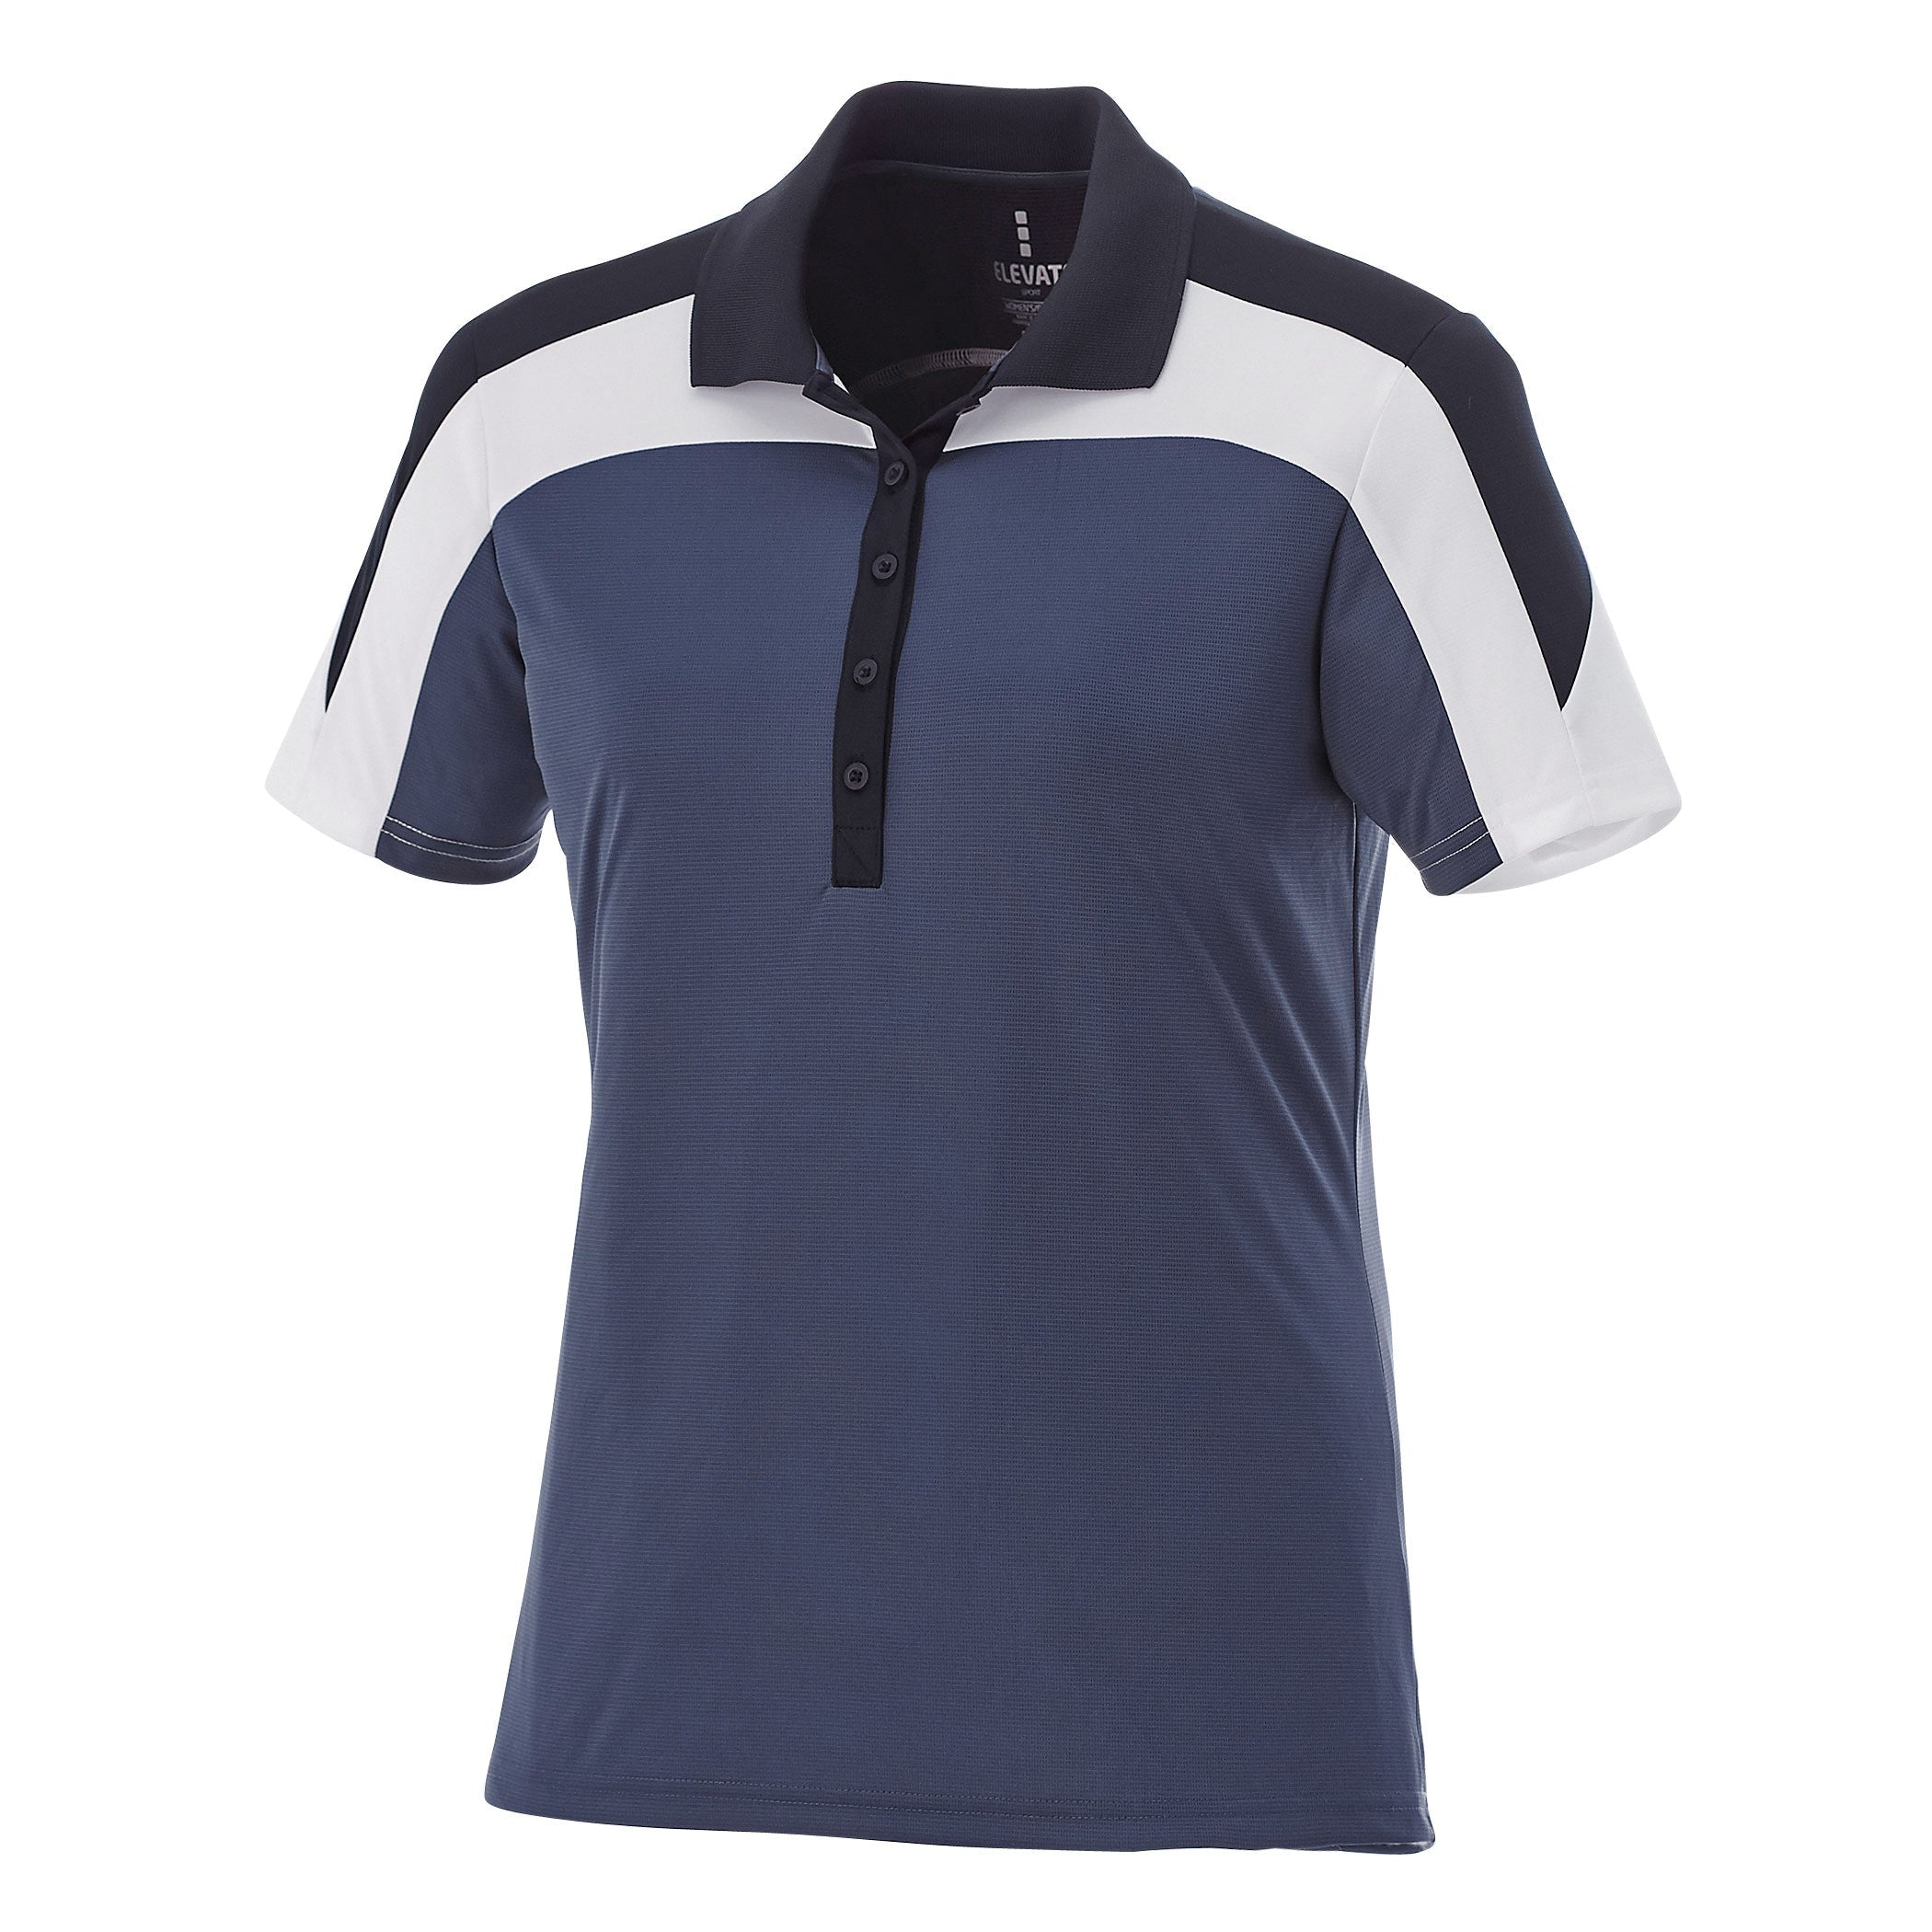 Ladies Vesta Golf Shirt - Navy Only-L-Navy-N